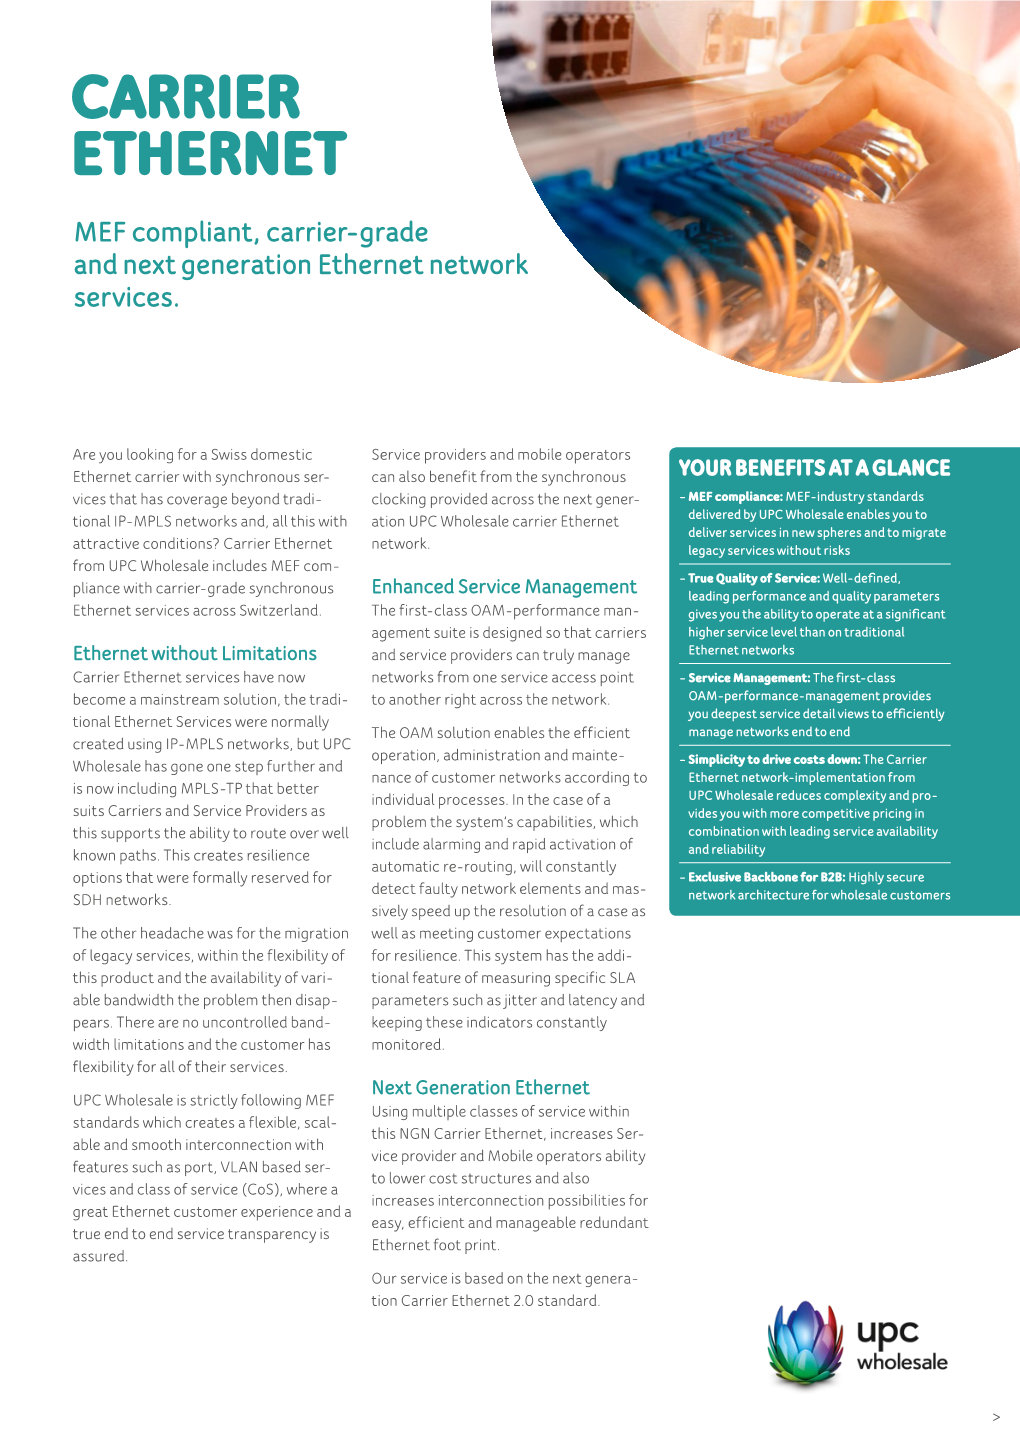 CARRIER ETHERNET MEF Compliant, Carrier-Grade and Next Generation Ethernet Network Services